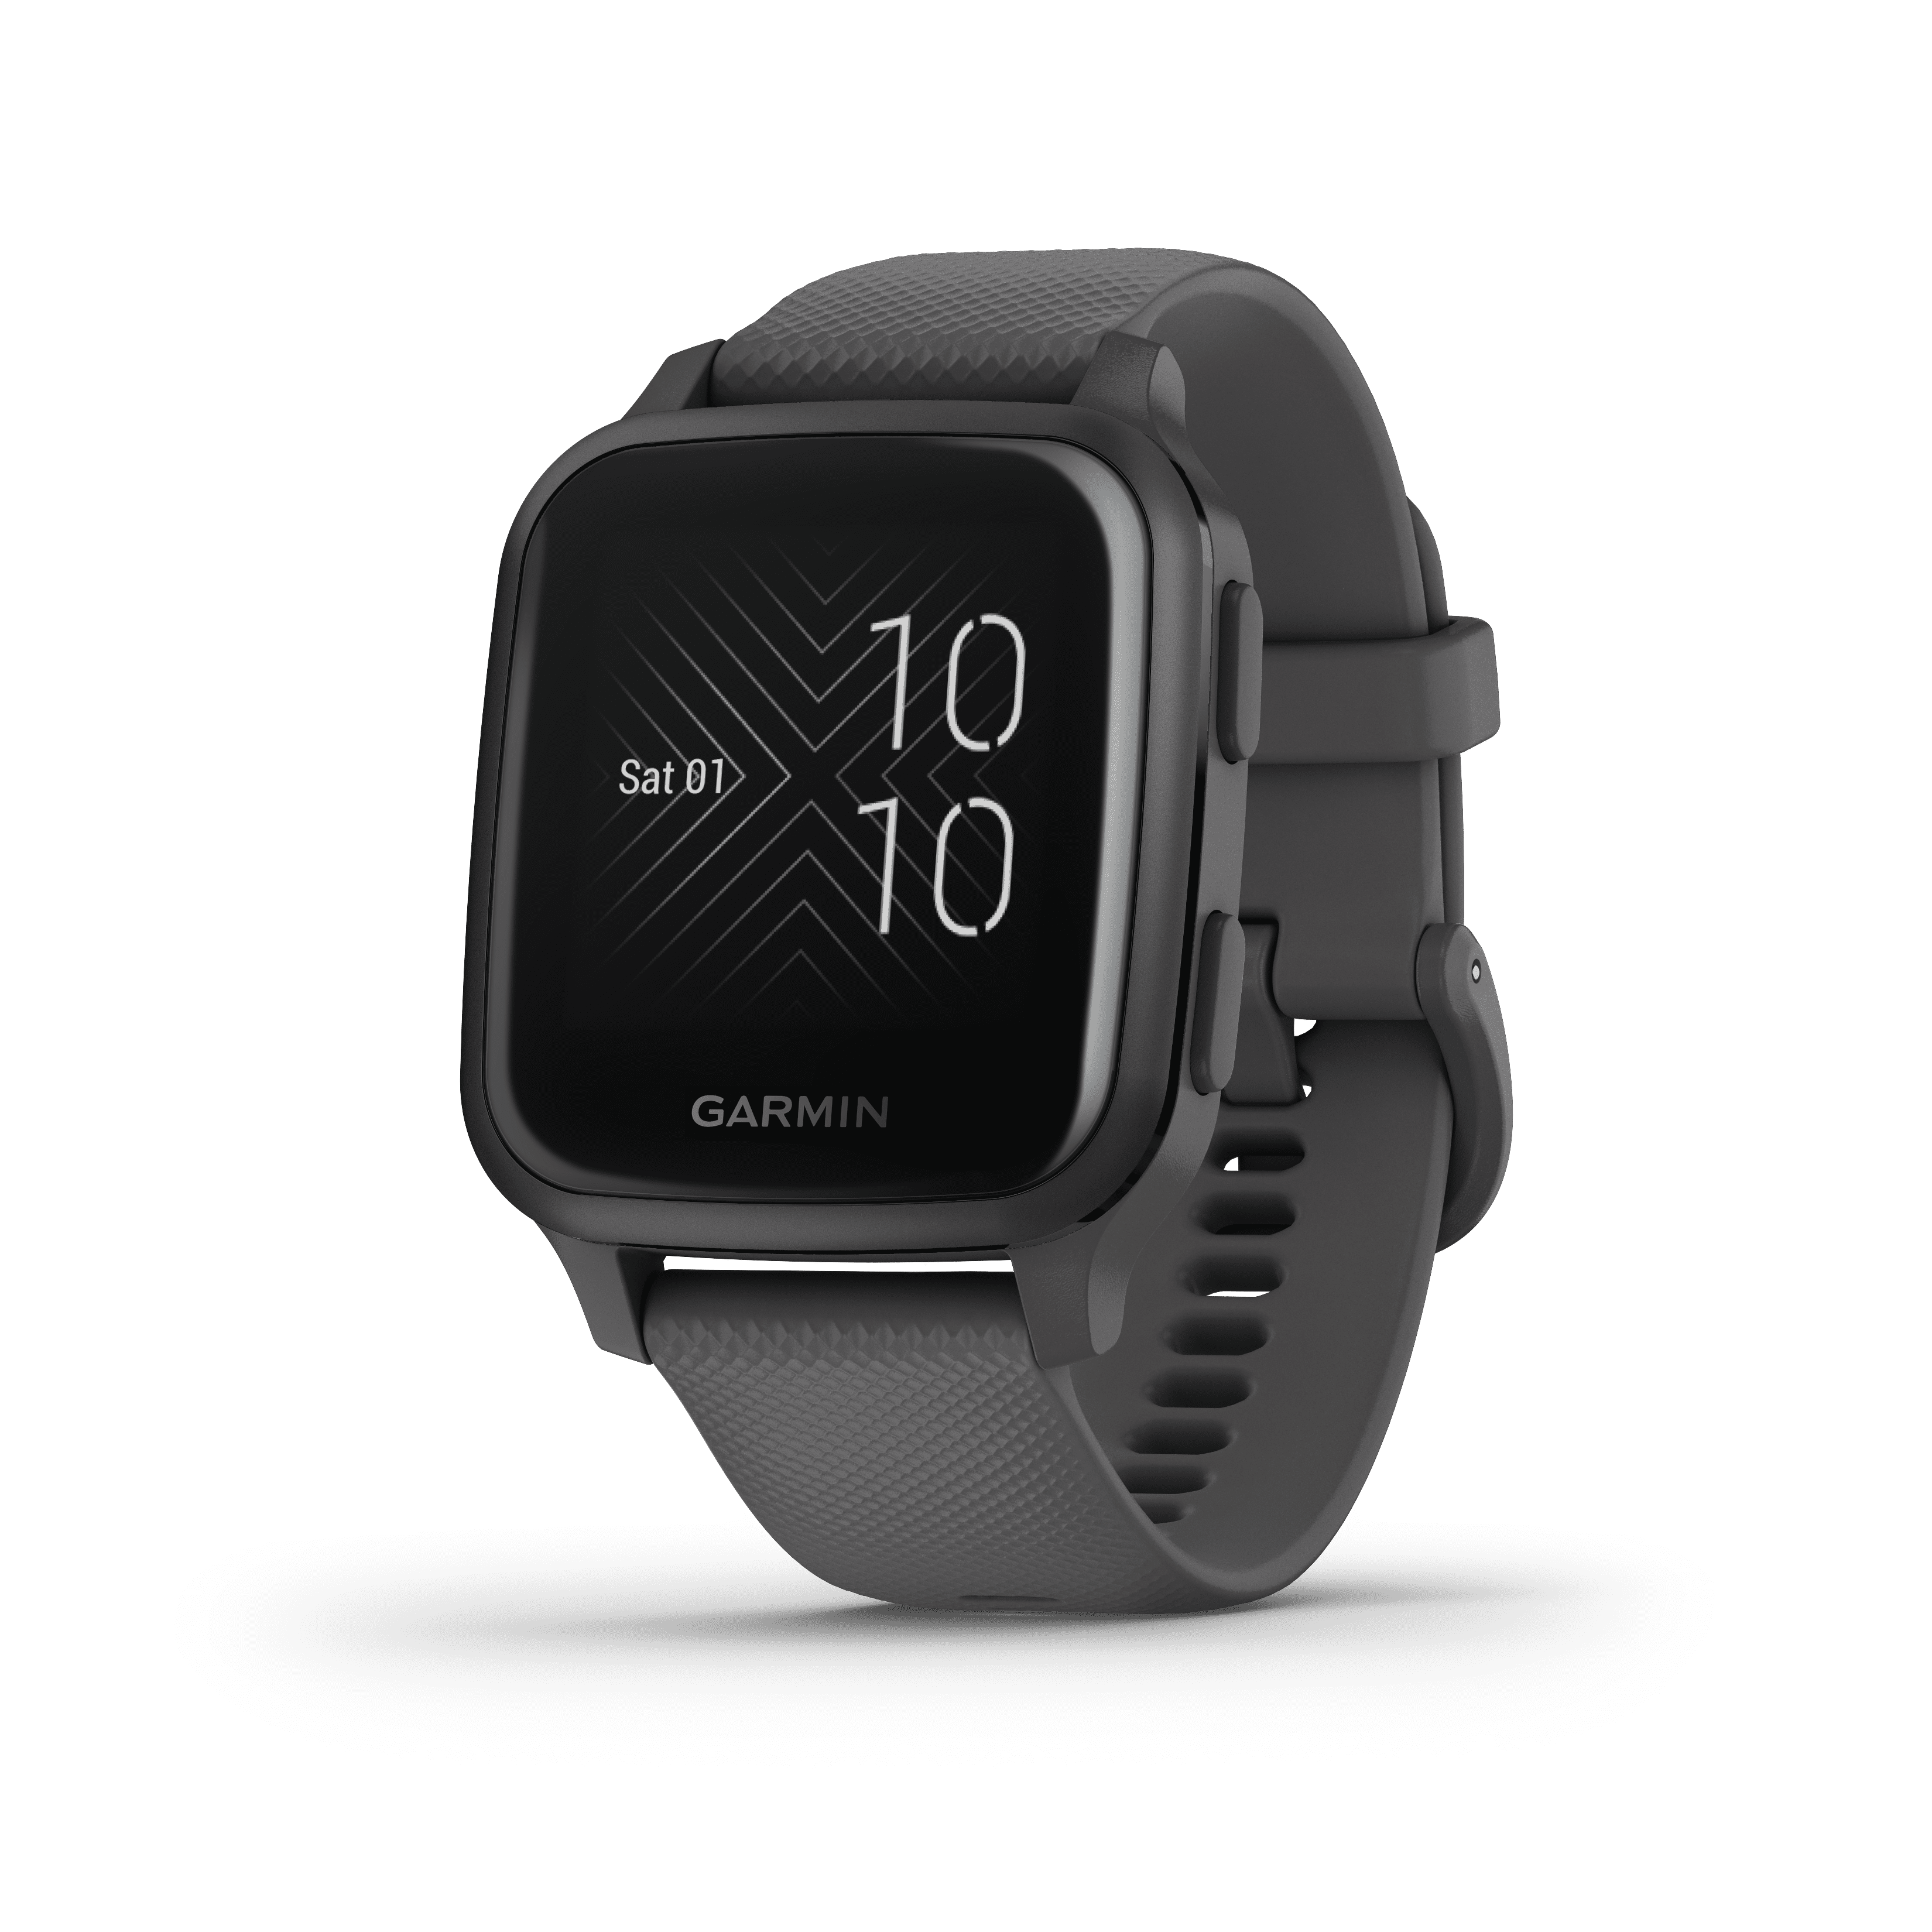 Fitbit Versa 2 Smartwatch - Walmart.com